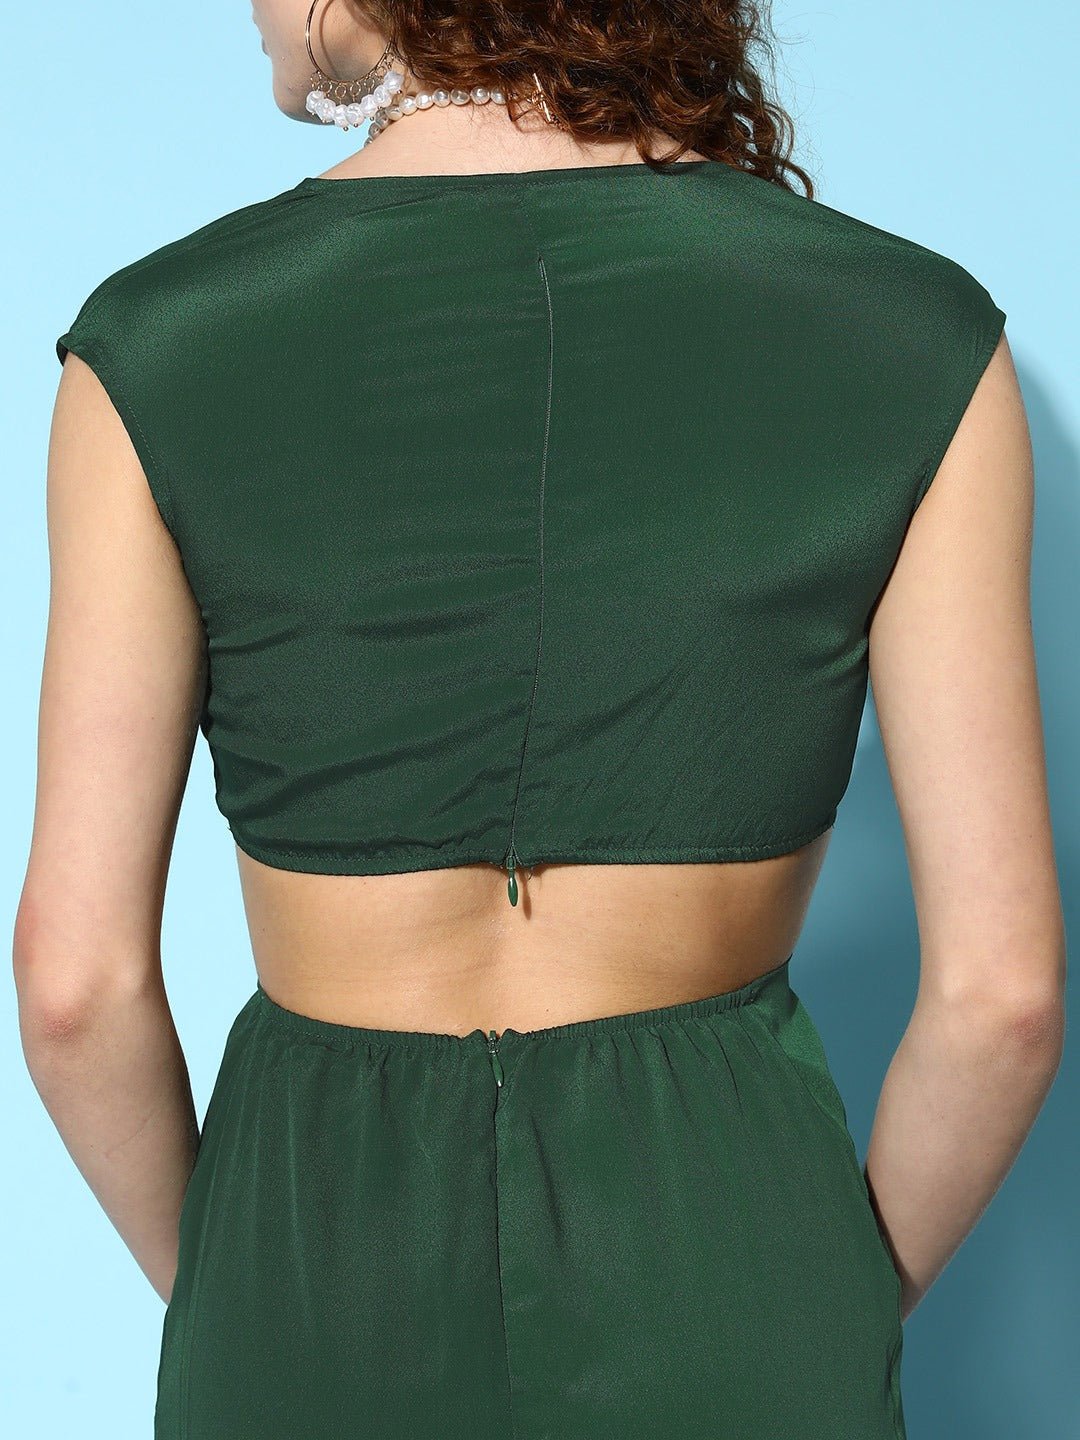 Folk Republic Women Solid Green V-Neck Satin Cutout Thigh-High Hem Pleated A-Line Maxi Dress - #folk republic#